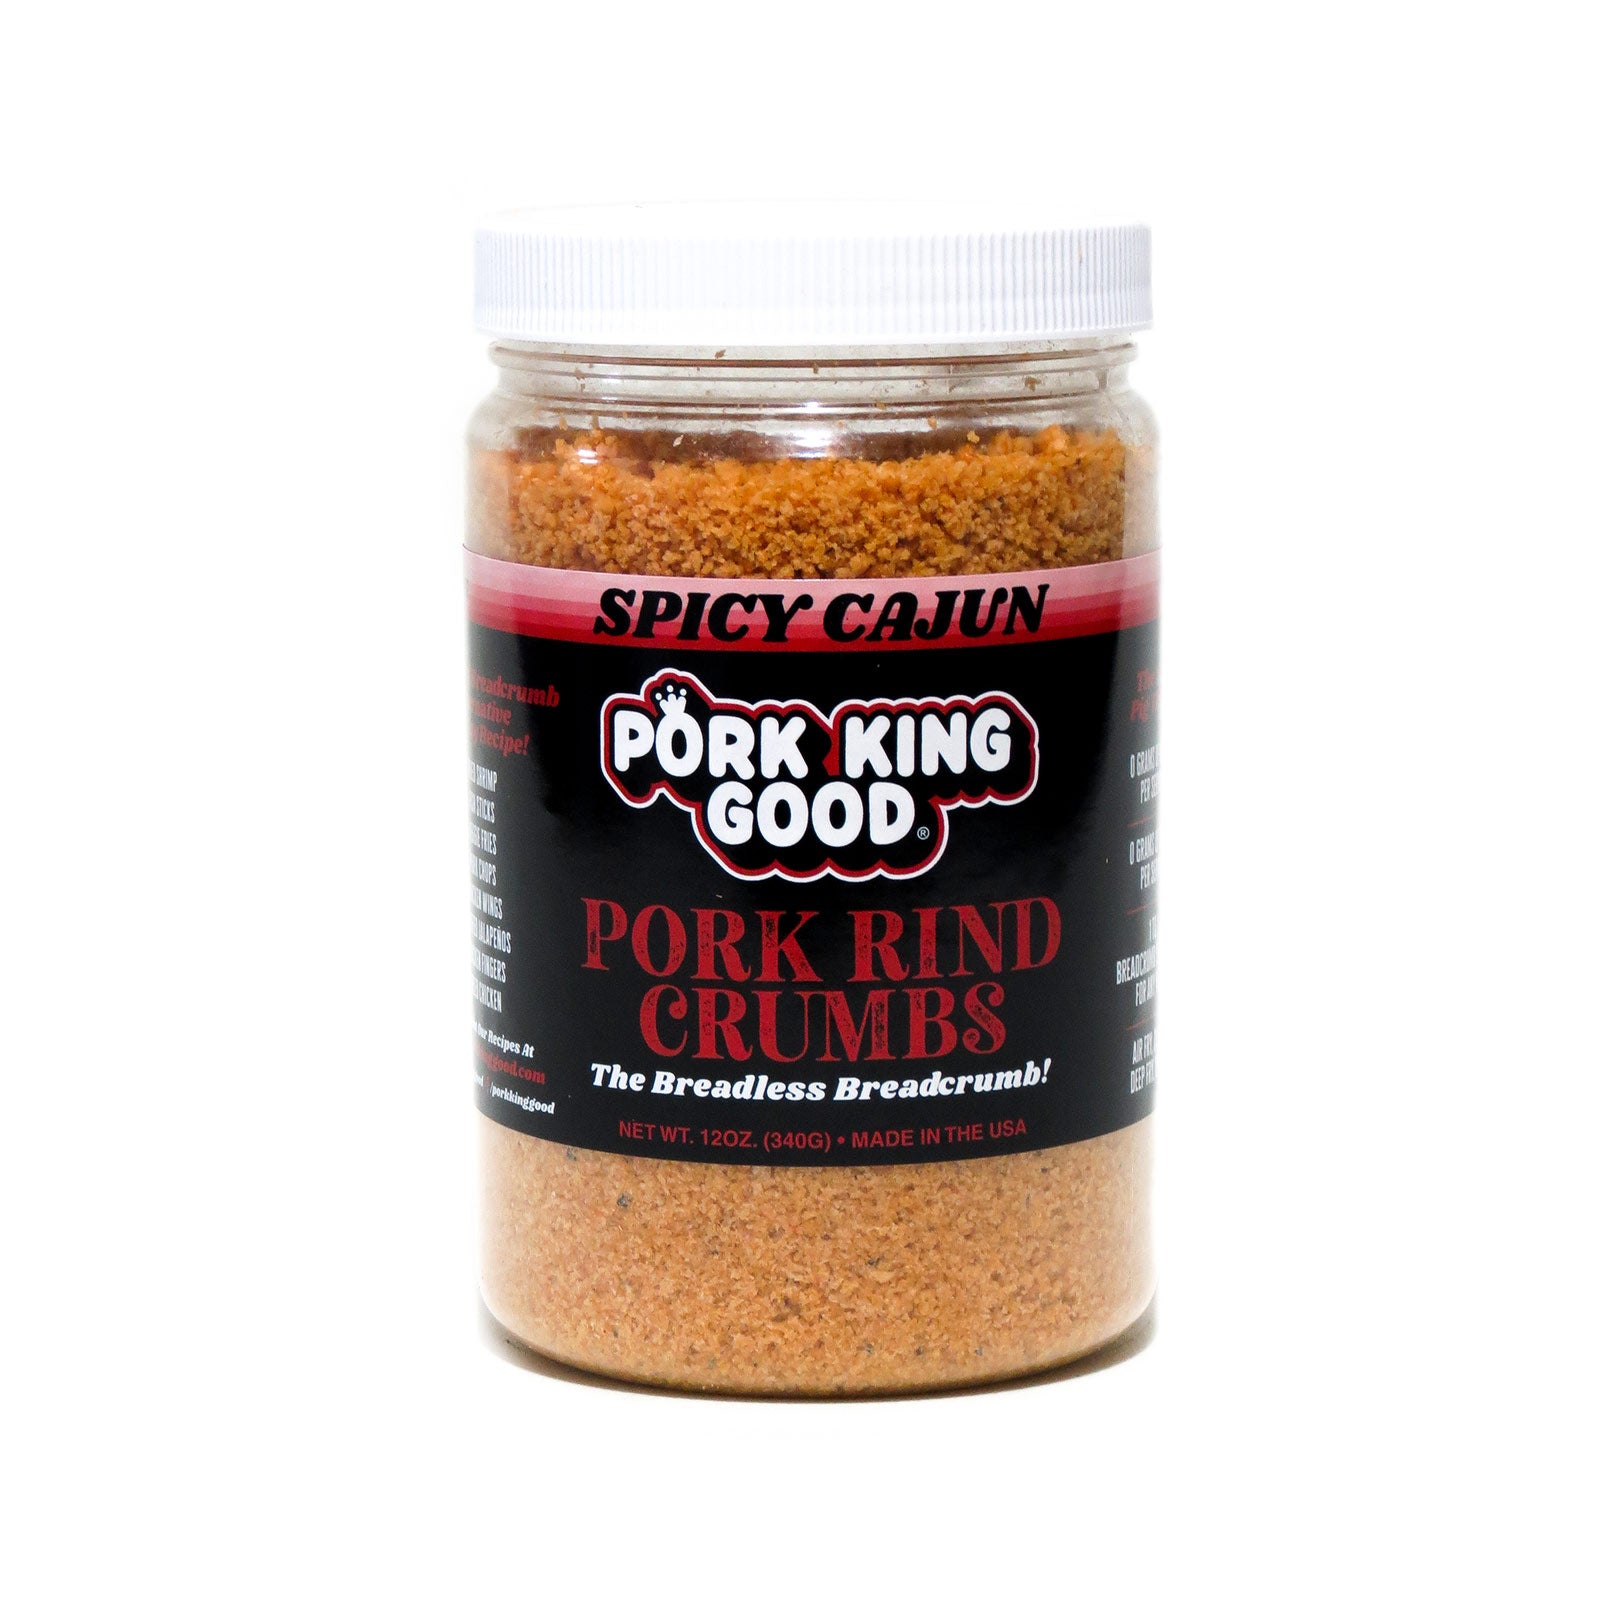 Pork King Good Pork Rind Crumbs Spicy Cajun Flavor - Pork King Good